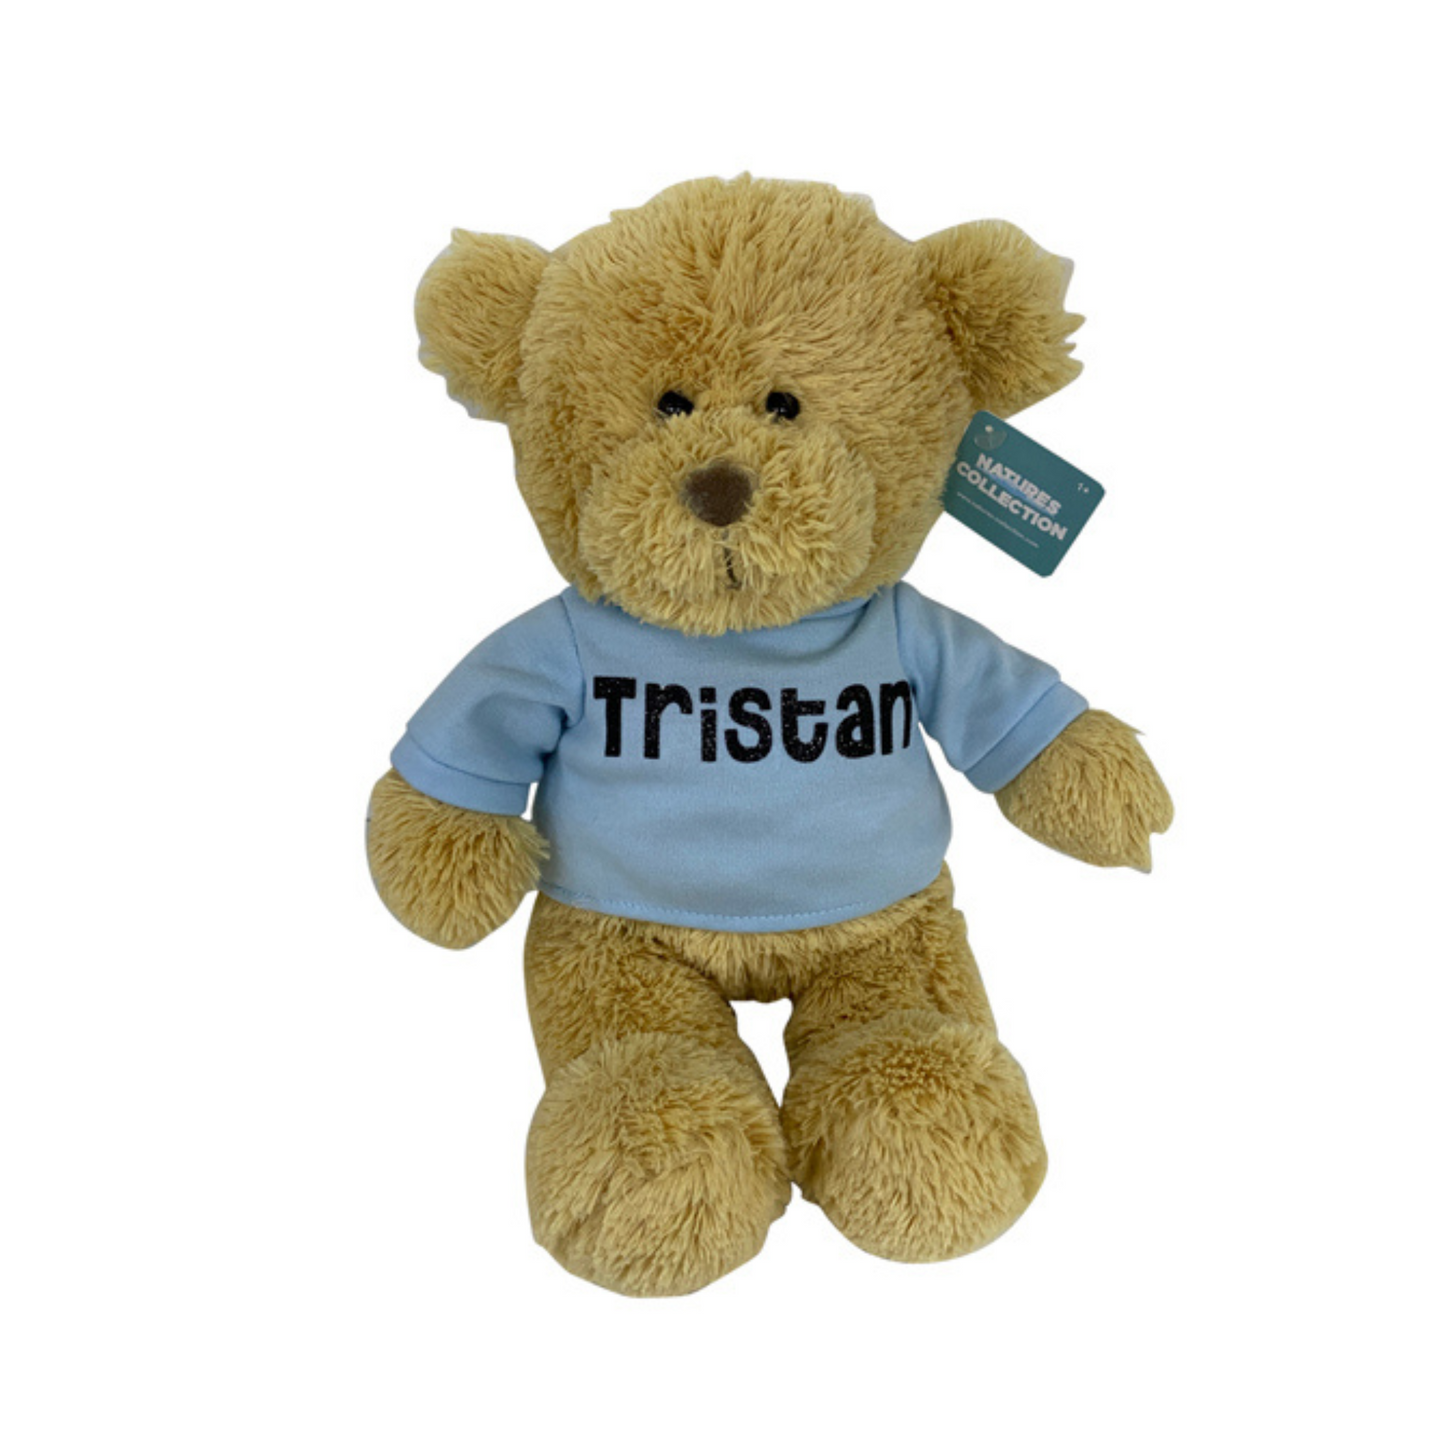 Customized Teddy Bear Plush - 12.5 inches